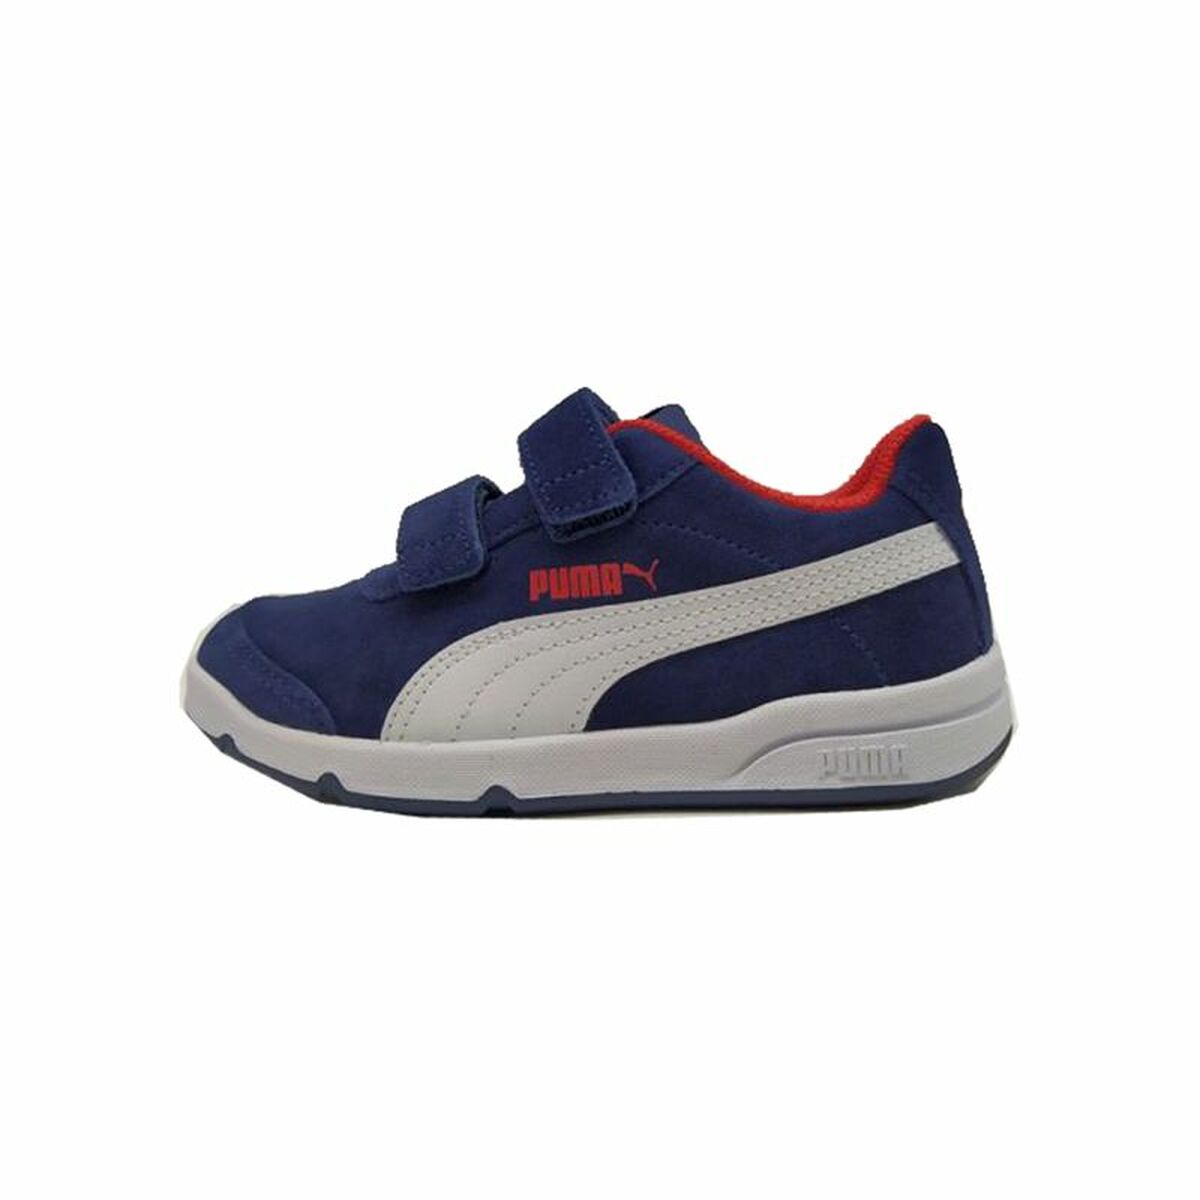 Sports Shoes for Kids Puma STEPFLEE V PSX 2 SD 371227 09